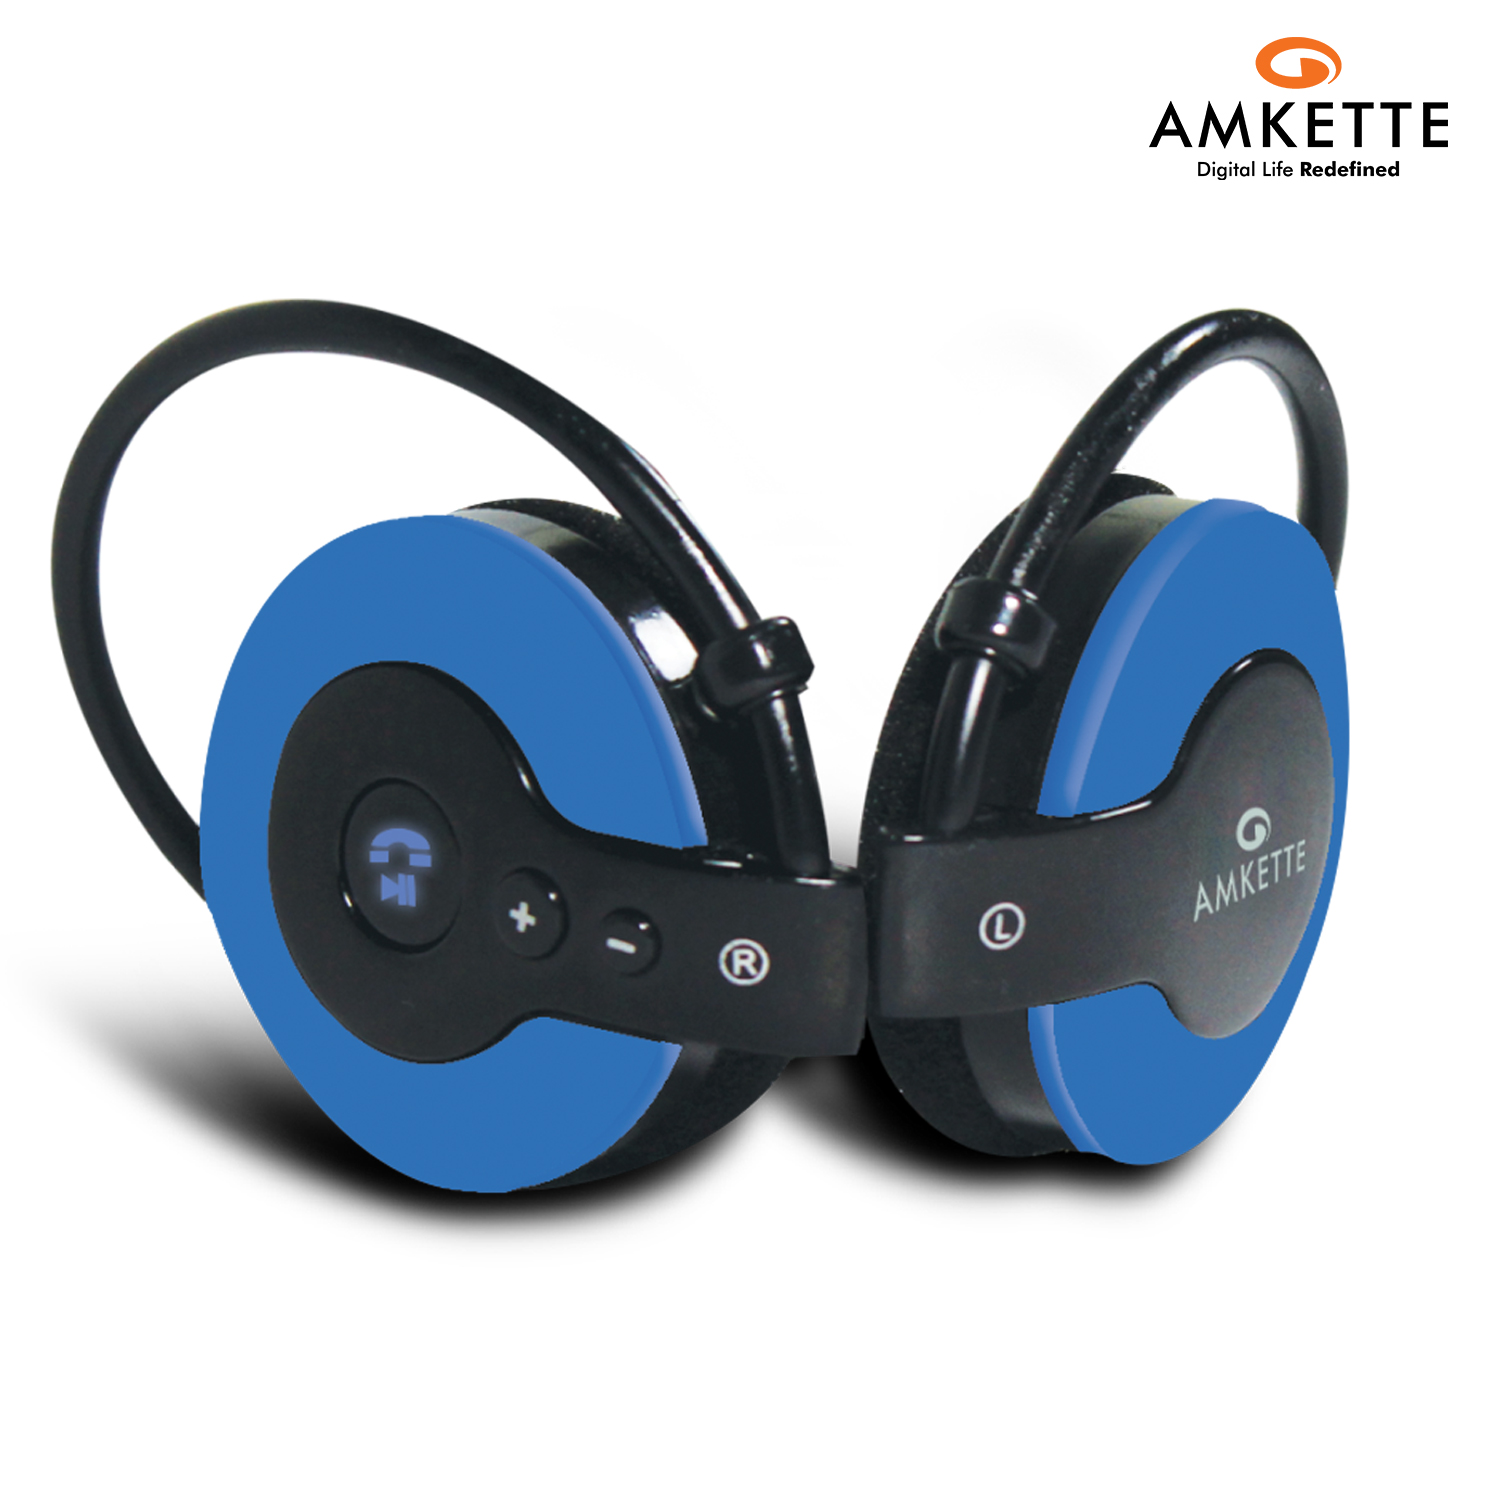 AMKETTE 700 BL OVER-EAR BLUETOOTH HEADPHONES (BLUE & BLACK)